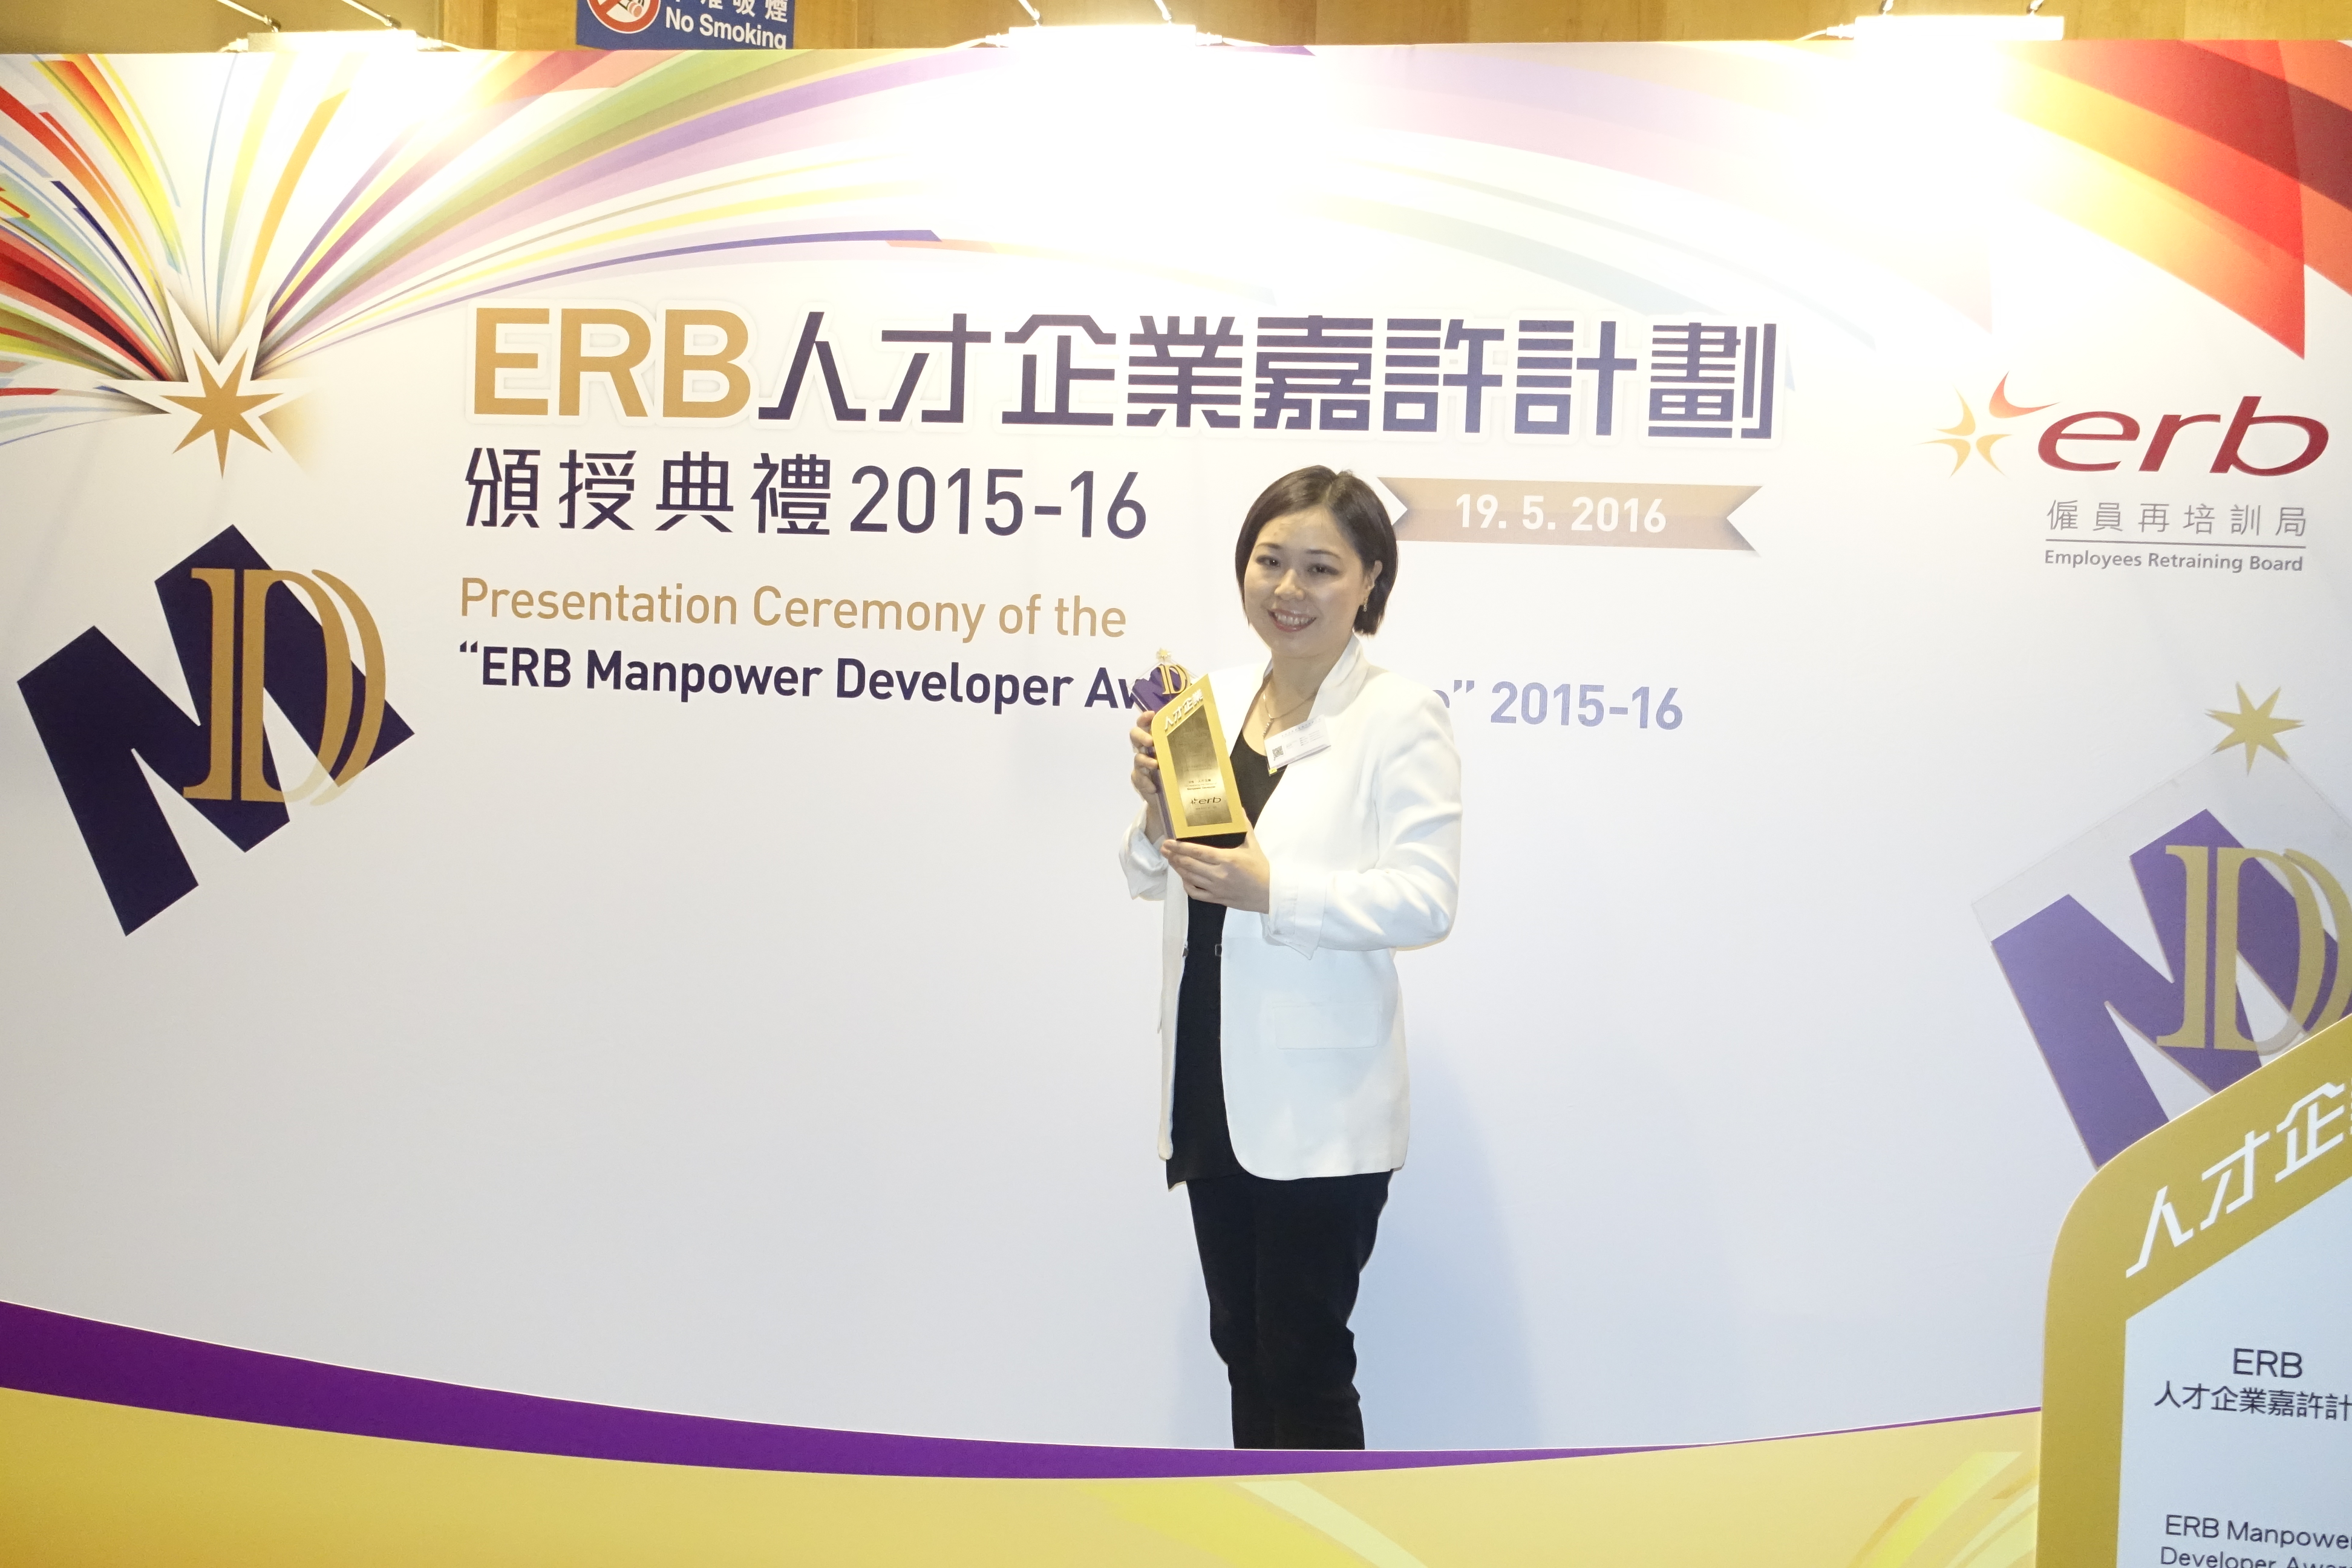 ERB 2016 Award